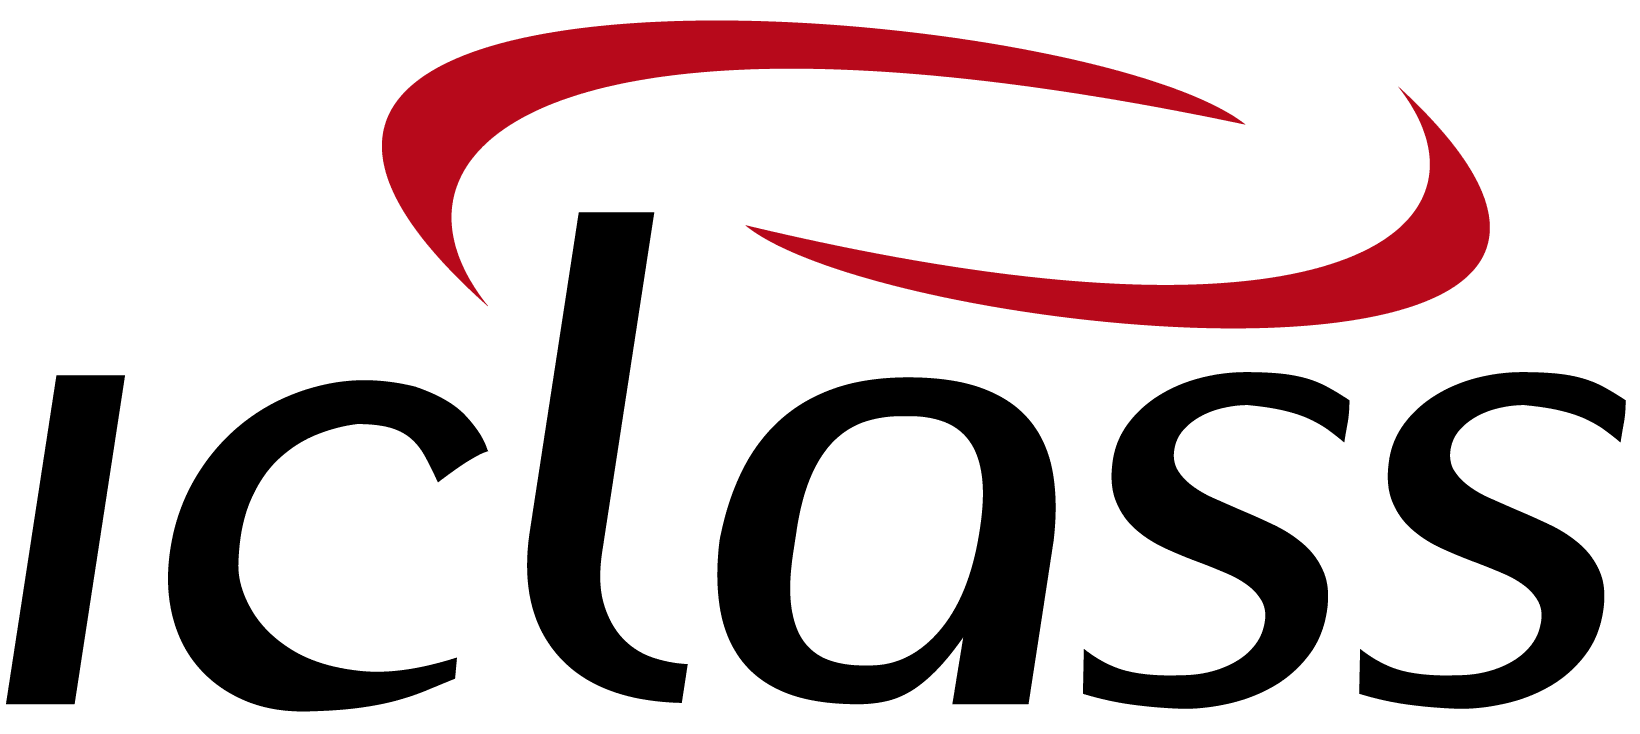 logo IClass Software de Ordem de Serviço Online download pdf iclass fs